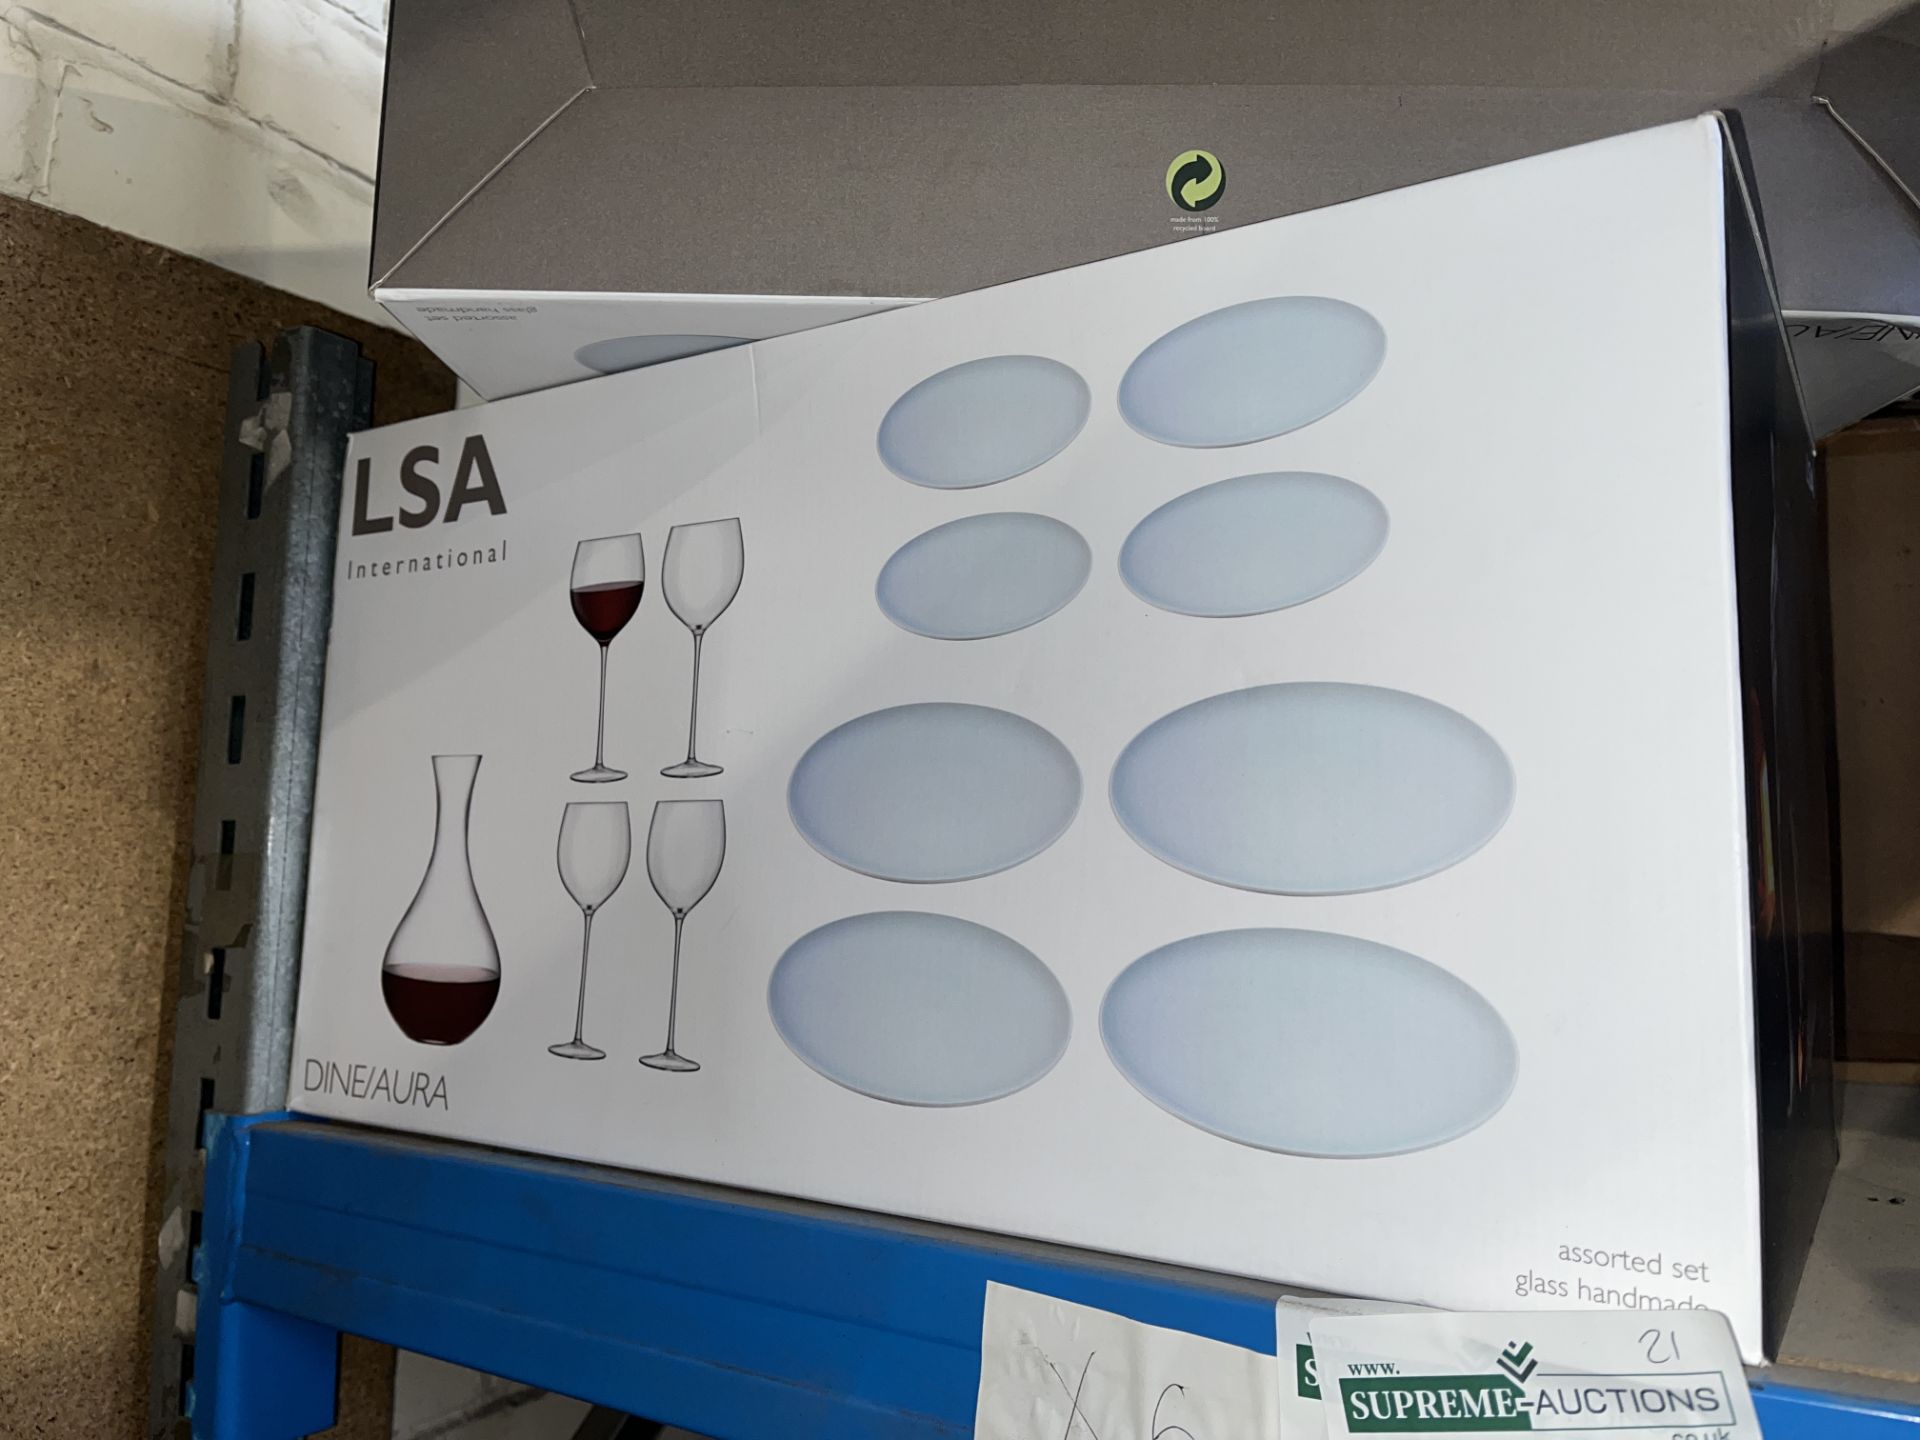 BRAND NEW LSA INTERNATIONAL DINE AURA HANDMADE ASSORTED GLASS SETS INCLUDING CARAFE, 4 RED WINE